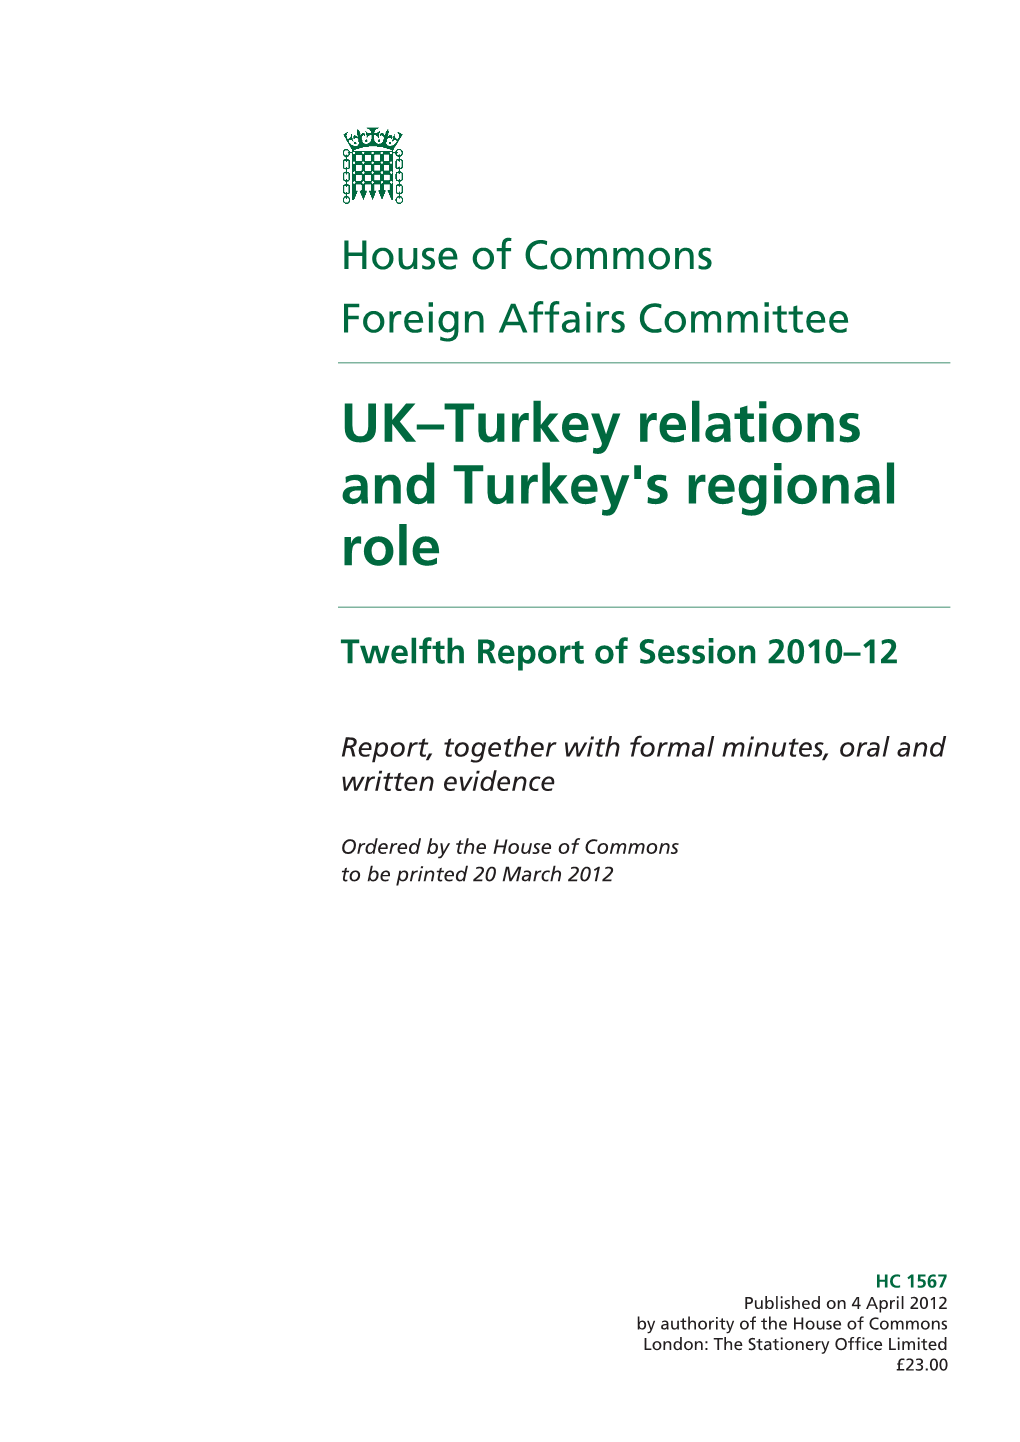 UK–Turkey Relations and Turkey's Regional Role